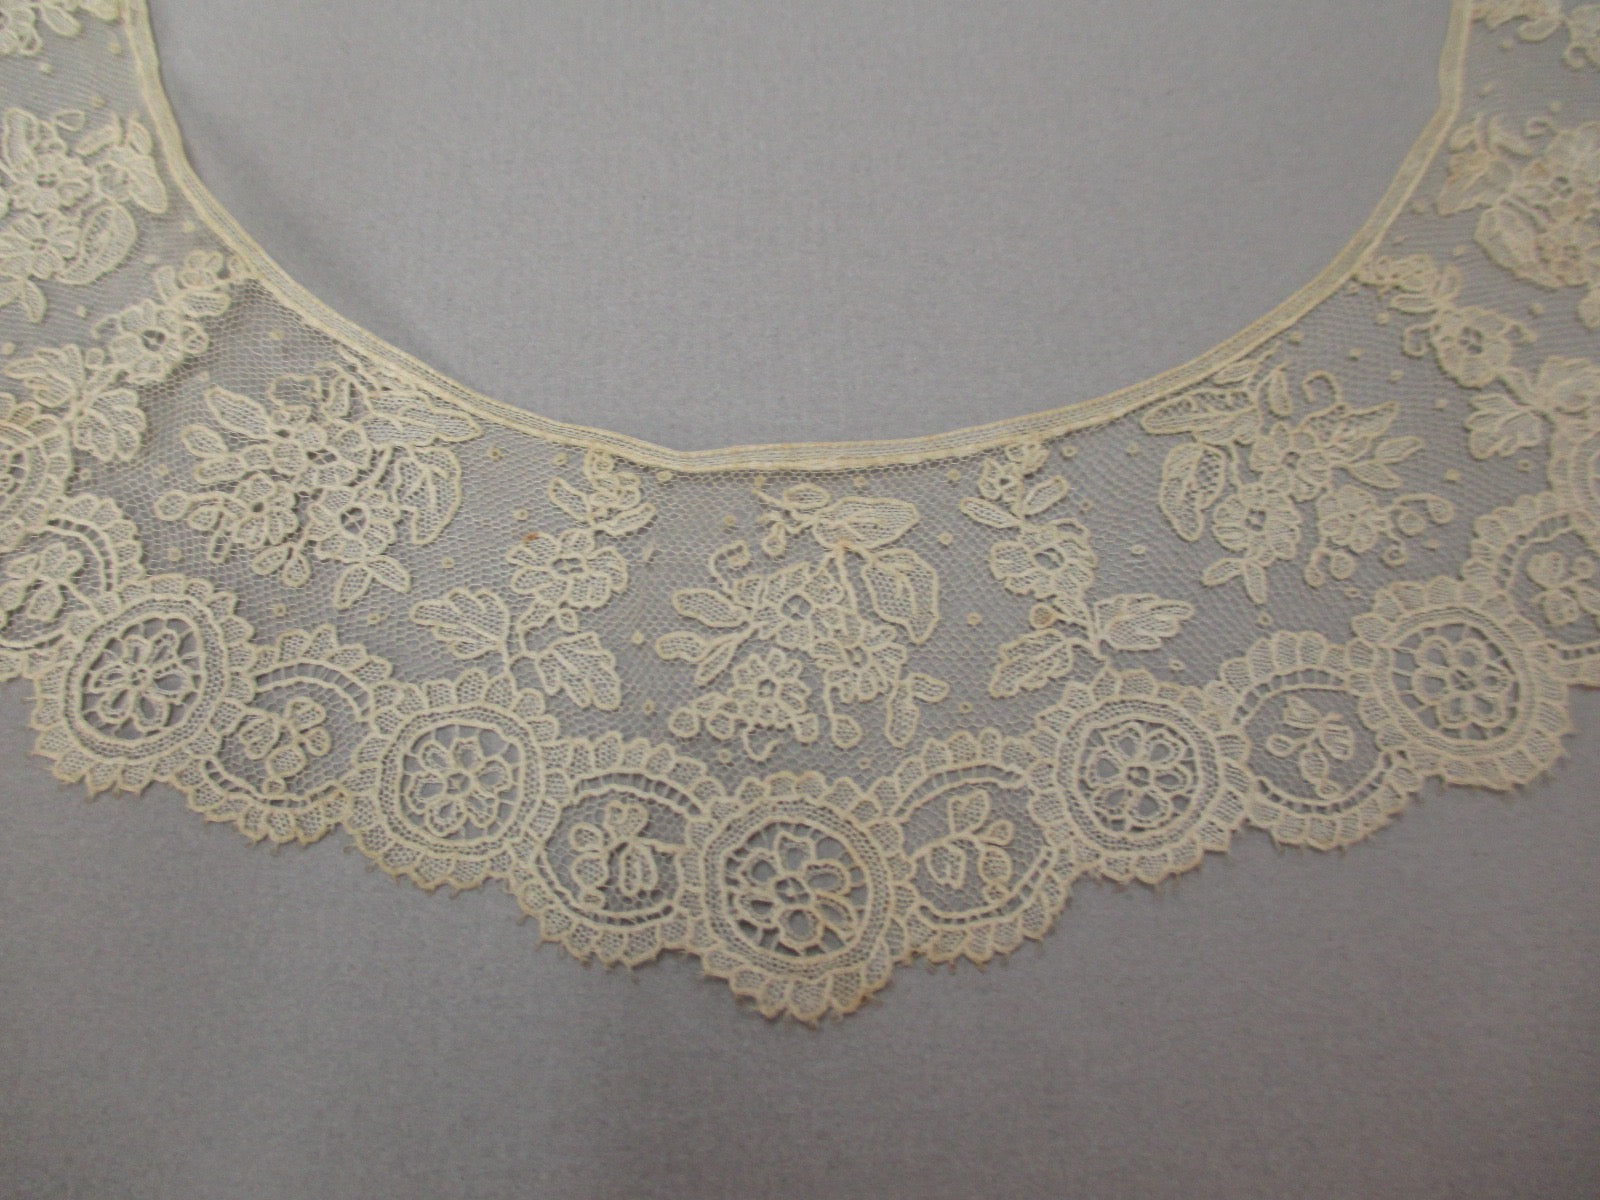 Antique lace collar handmade Point de Gaze